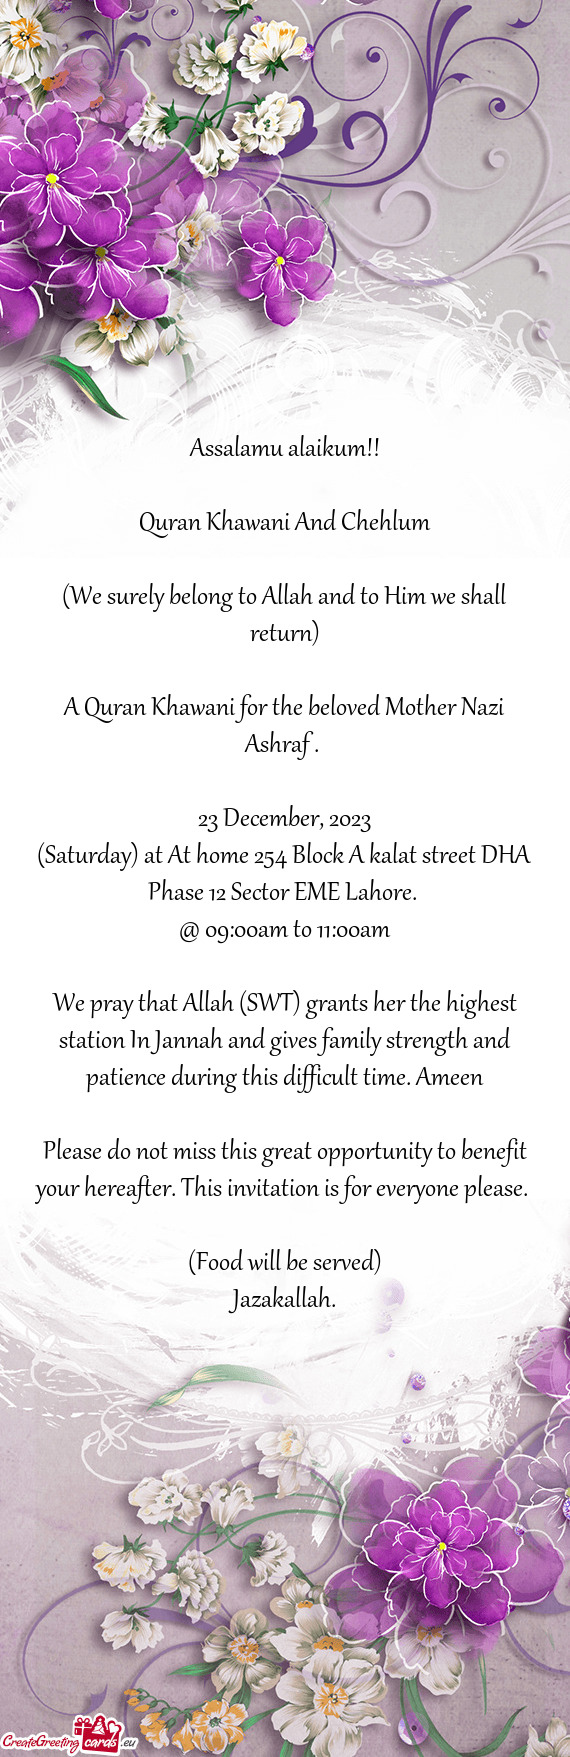 A Quran Khawani for the beloved Mother Nazi Ashraf